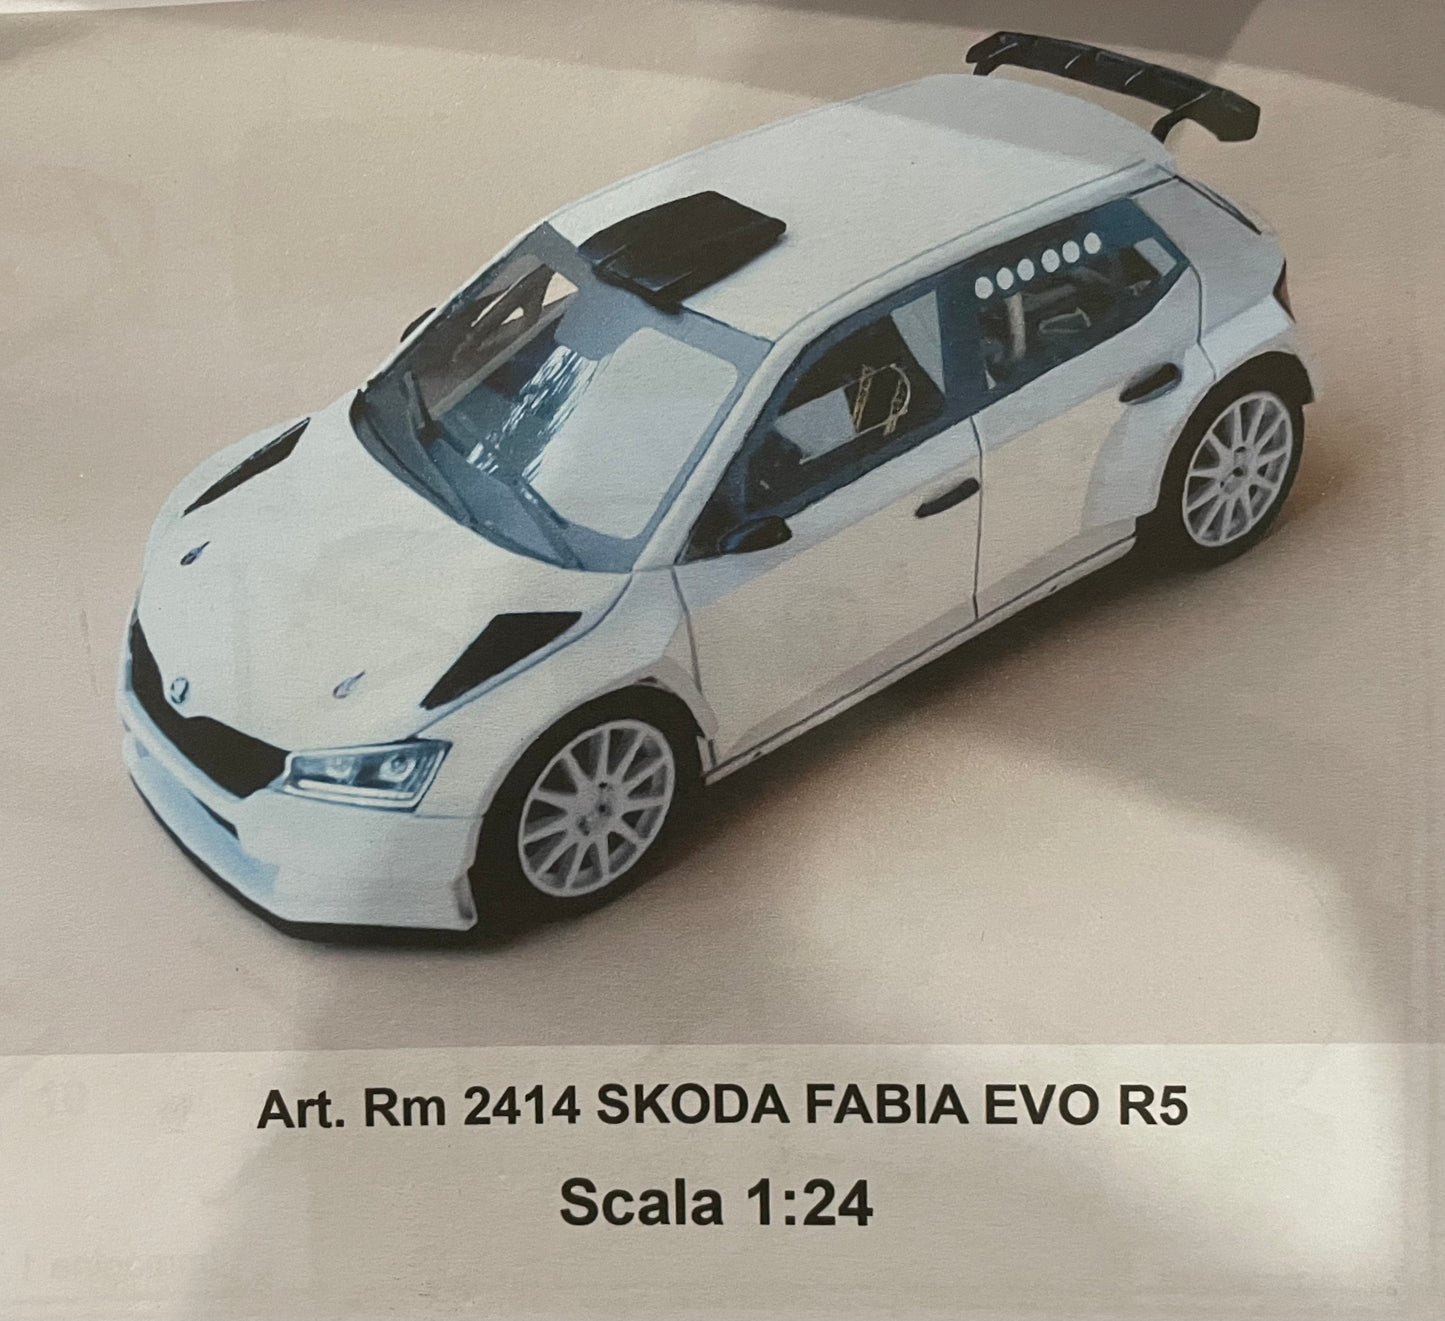 SKODA FABIA EVO R5 RALLY CAR - MODEL KIT